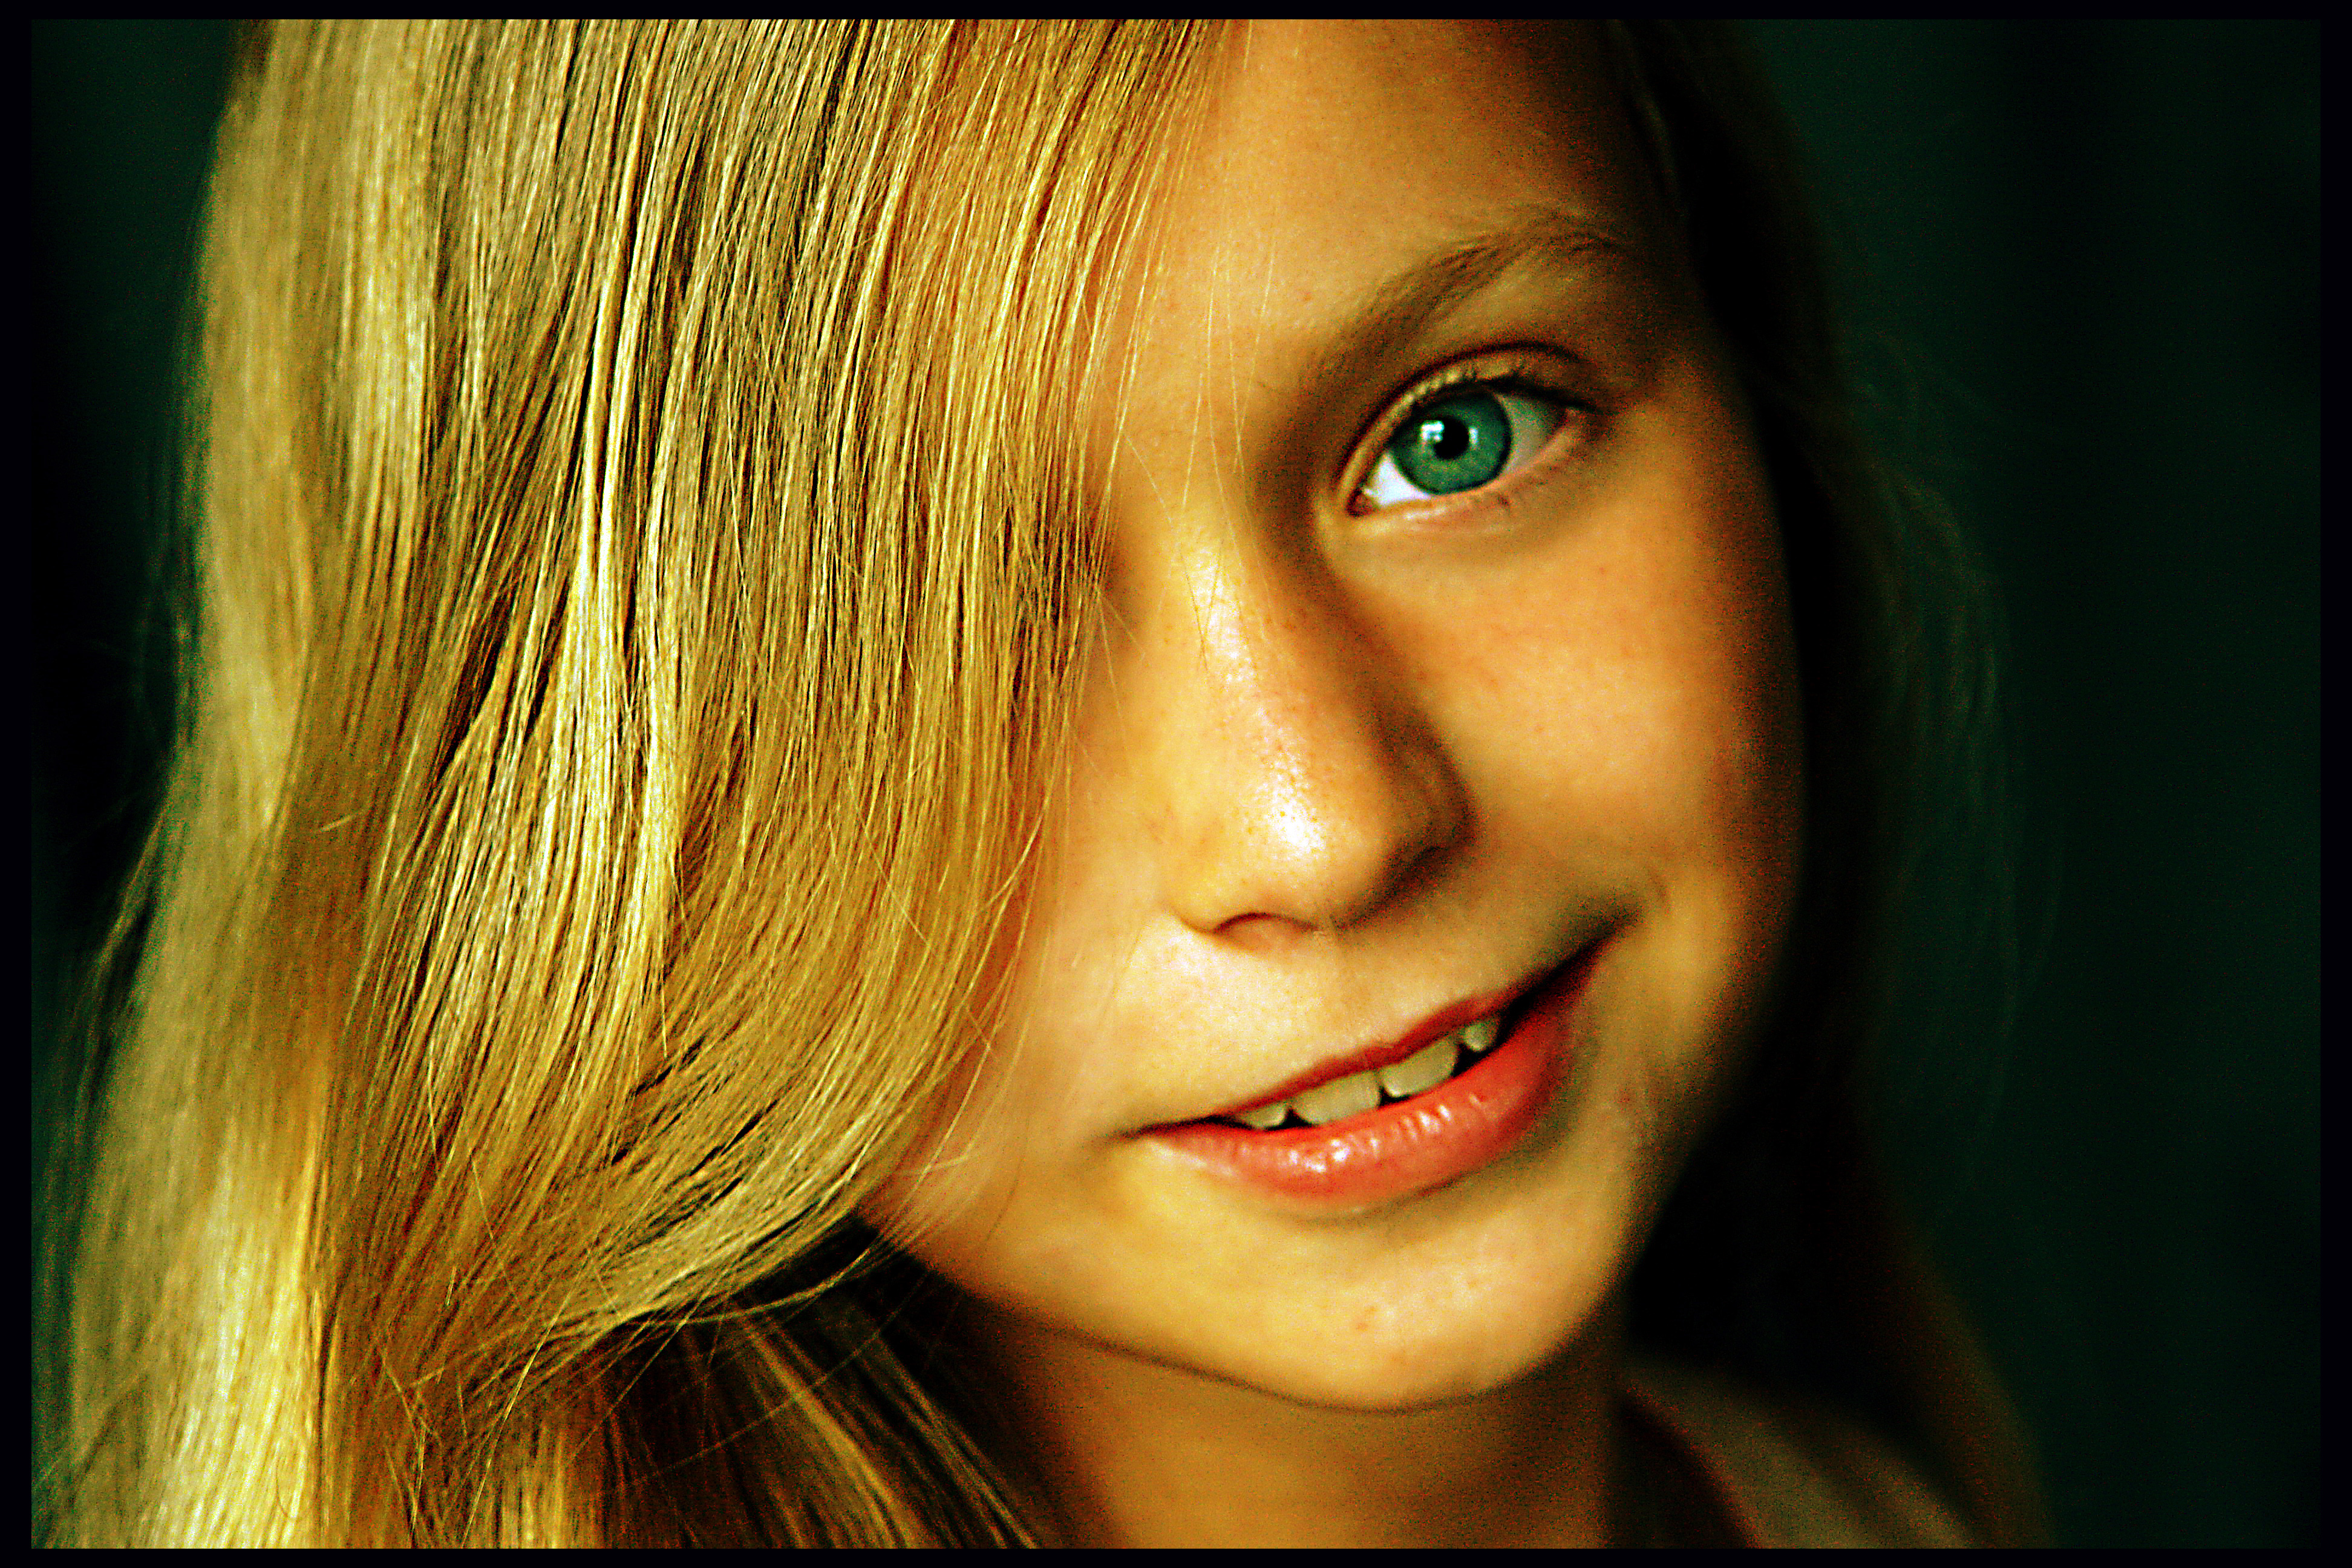 File:Face of blonde girl.jpg - Wikimedia Commons